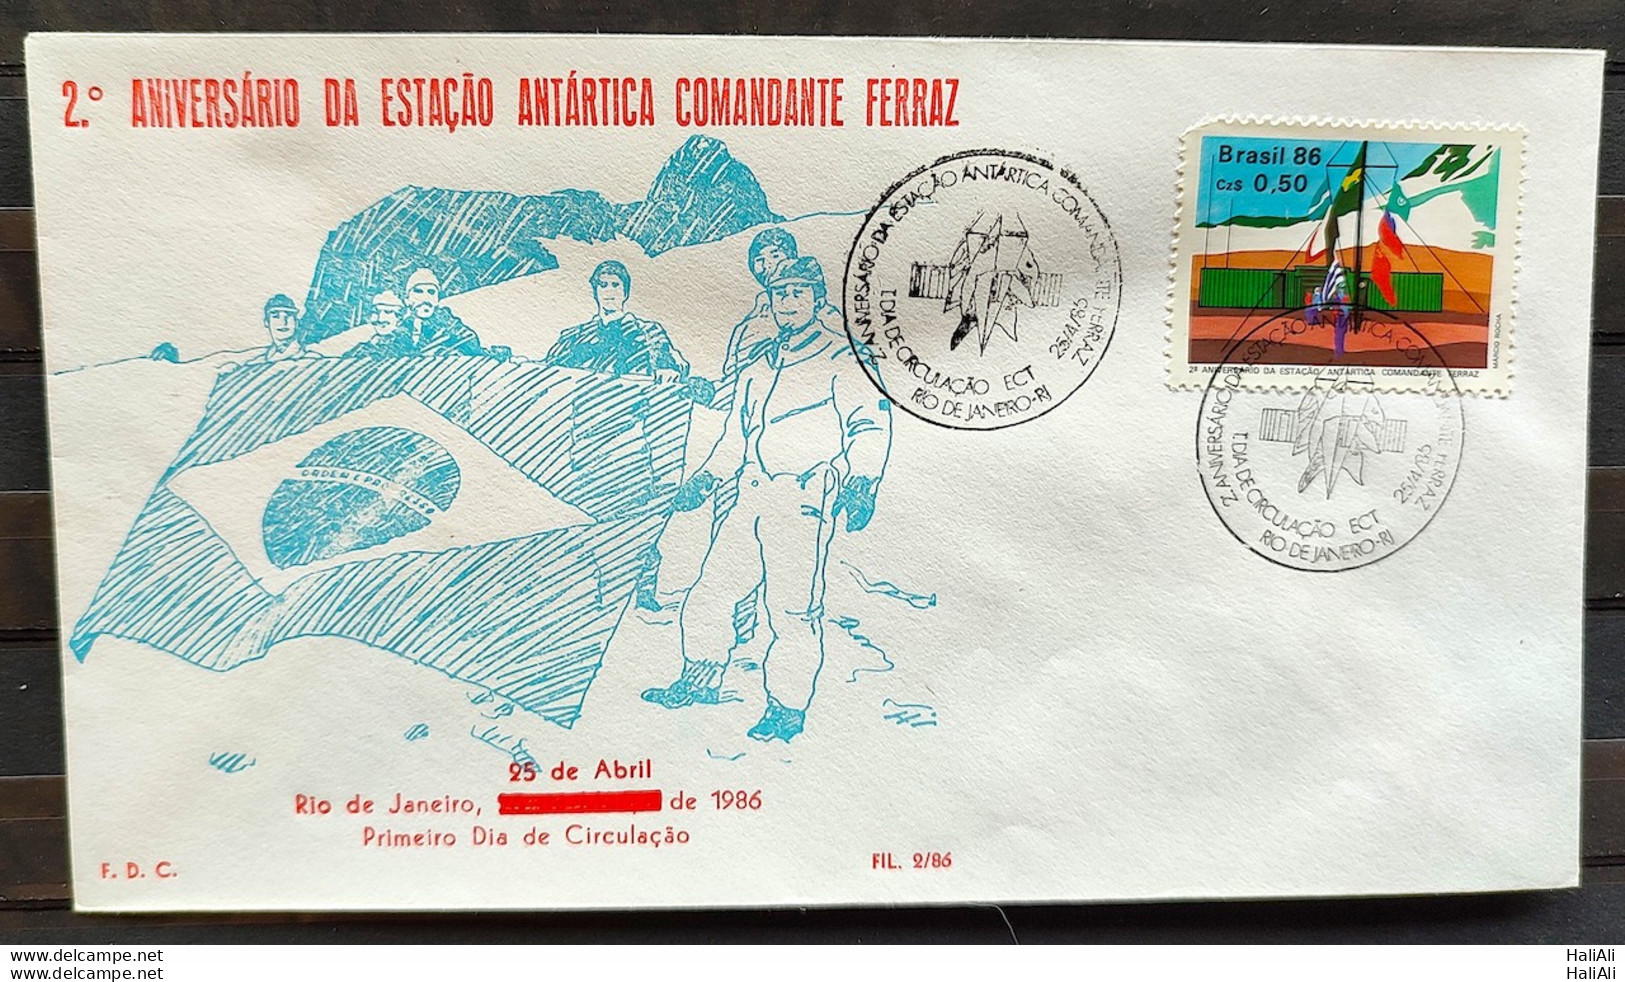 Brazil Envelope PVT FIL 002 1986 Antarctic Station Commander Ferraz Bandeira CBC RJ - FDC